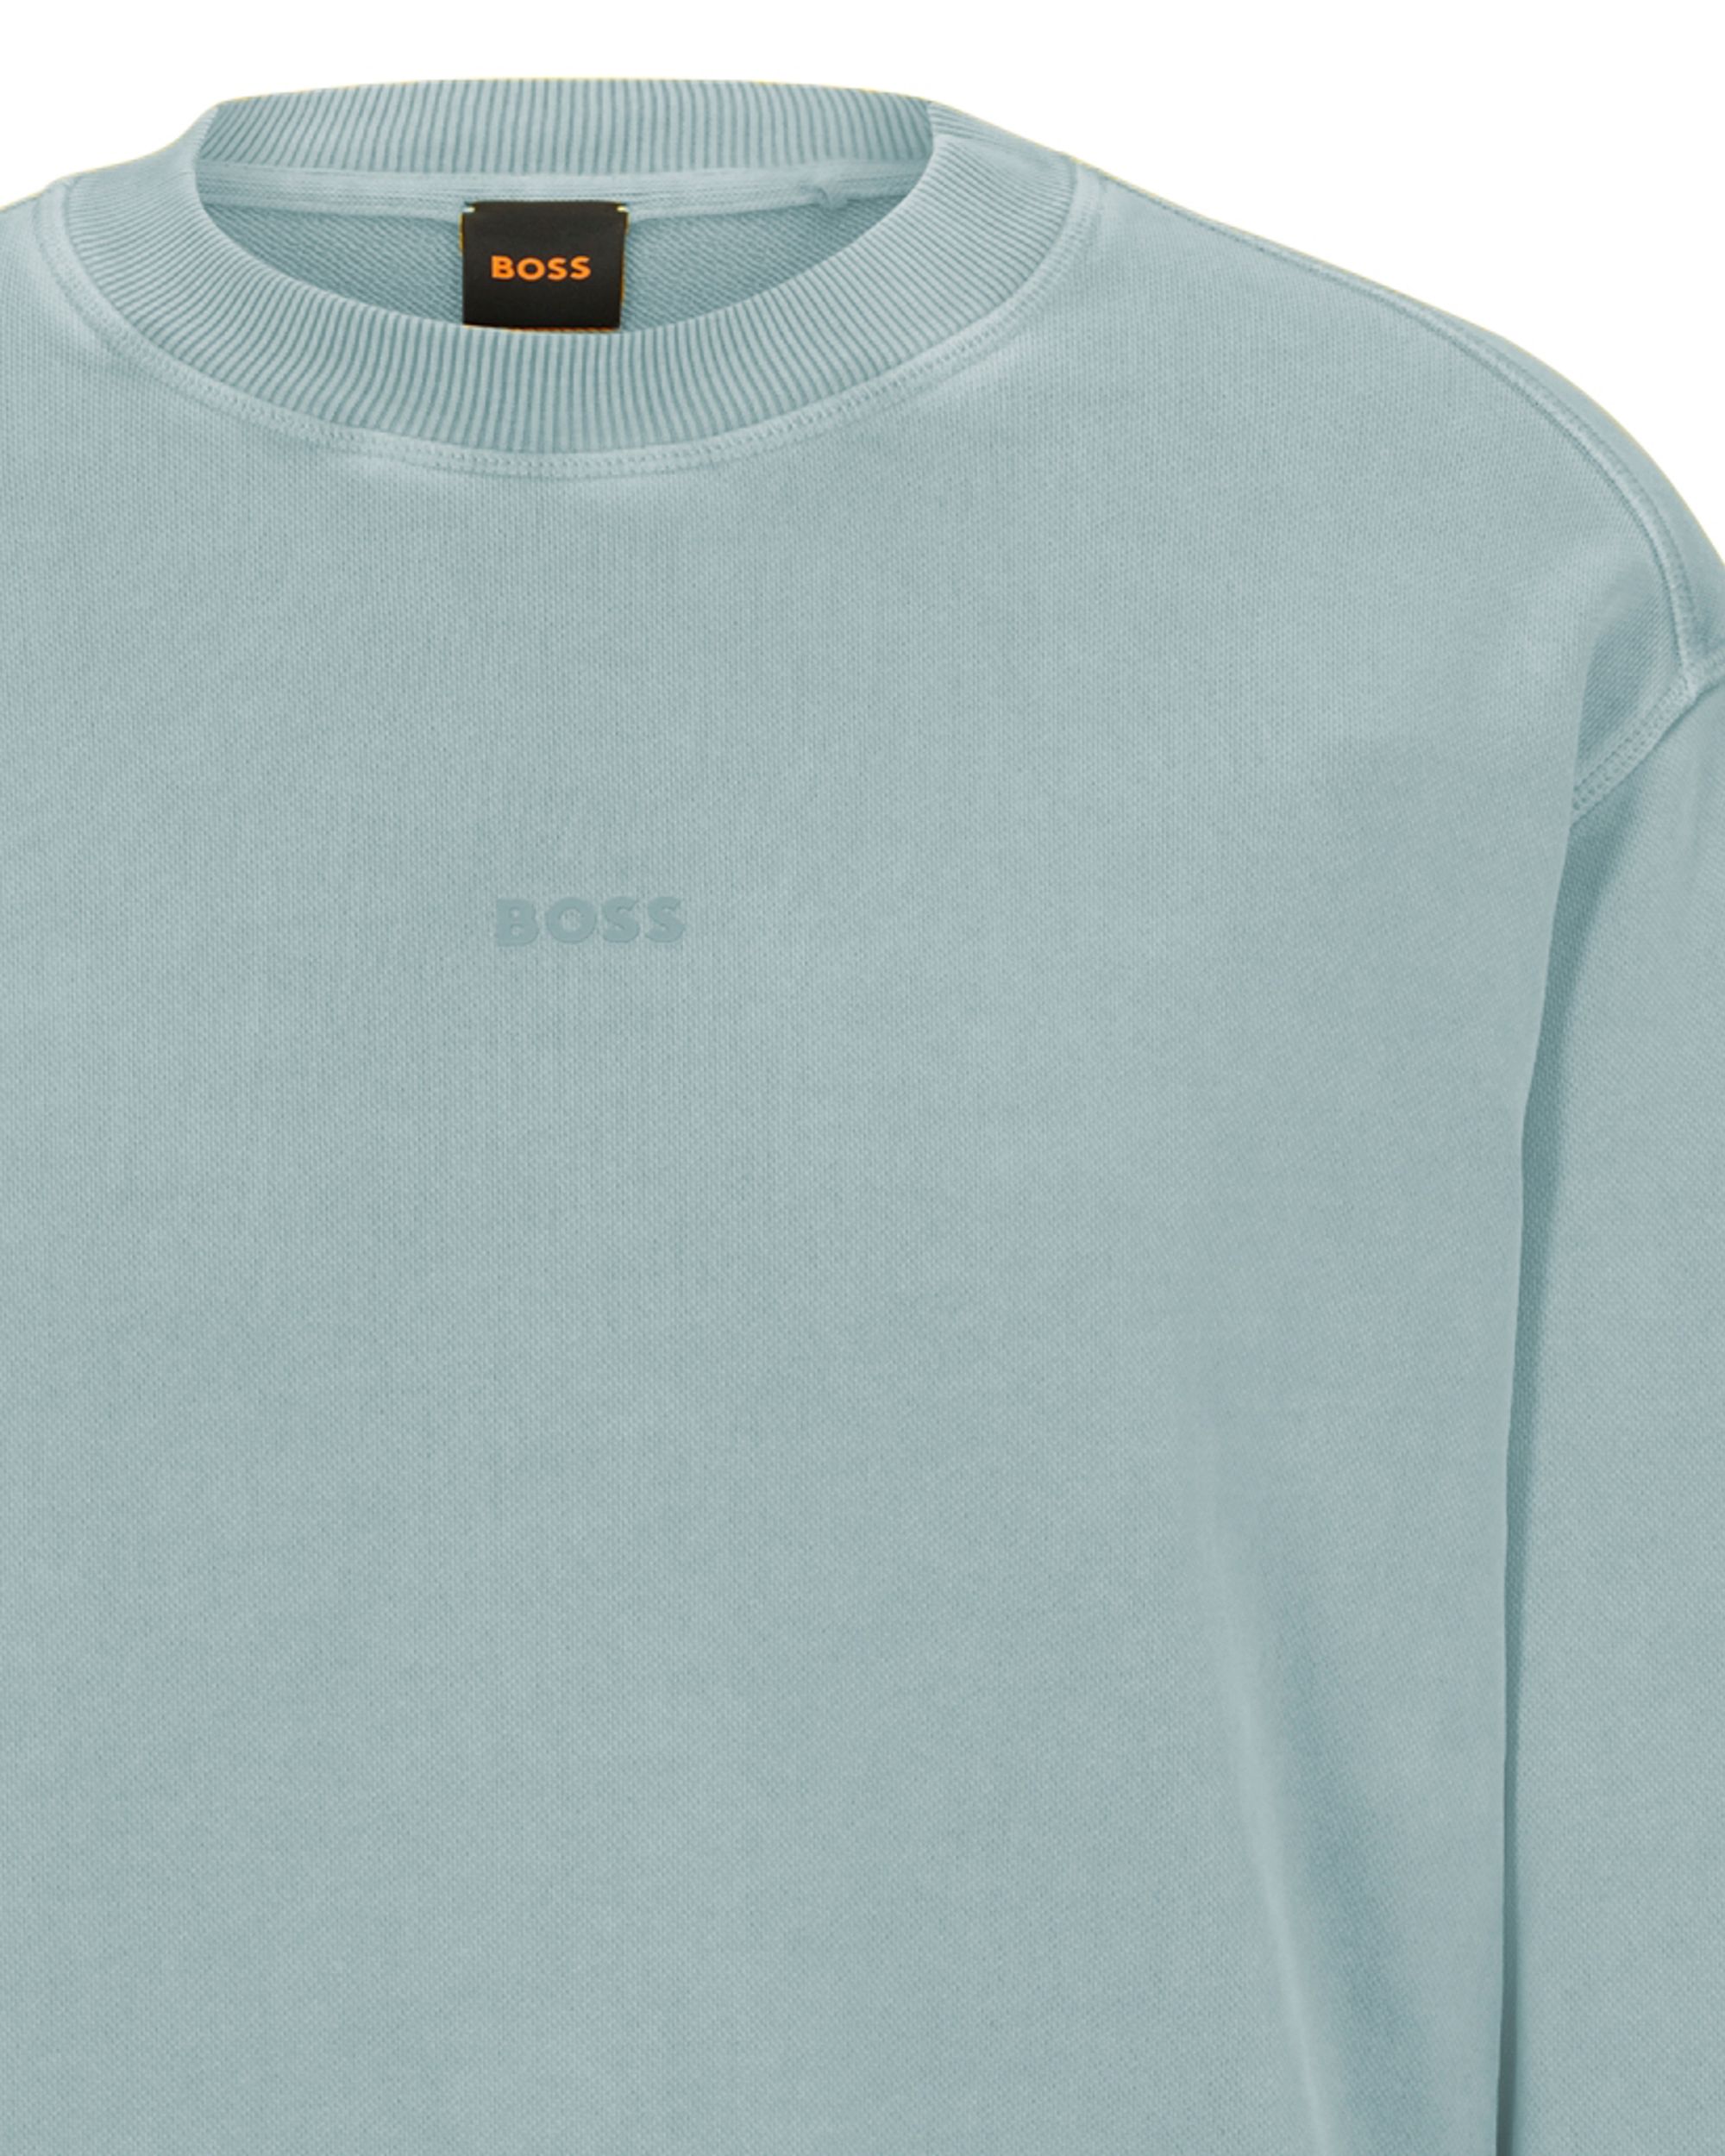 Boss Wefade Sweater Licht blauw 092729-001-L